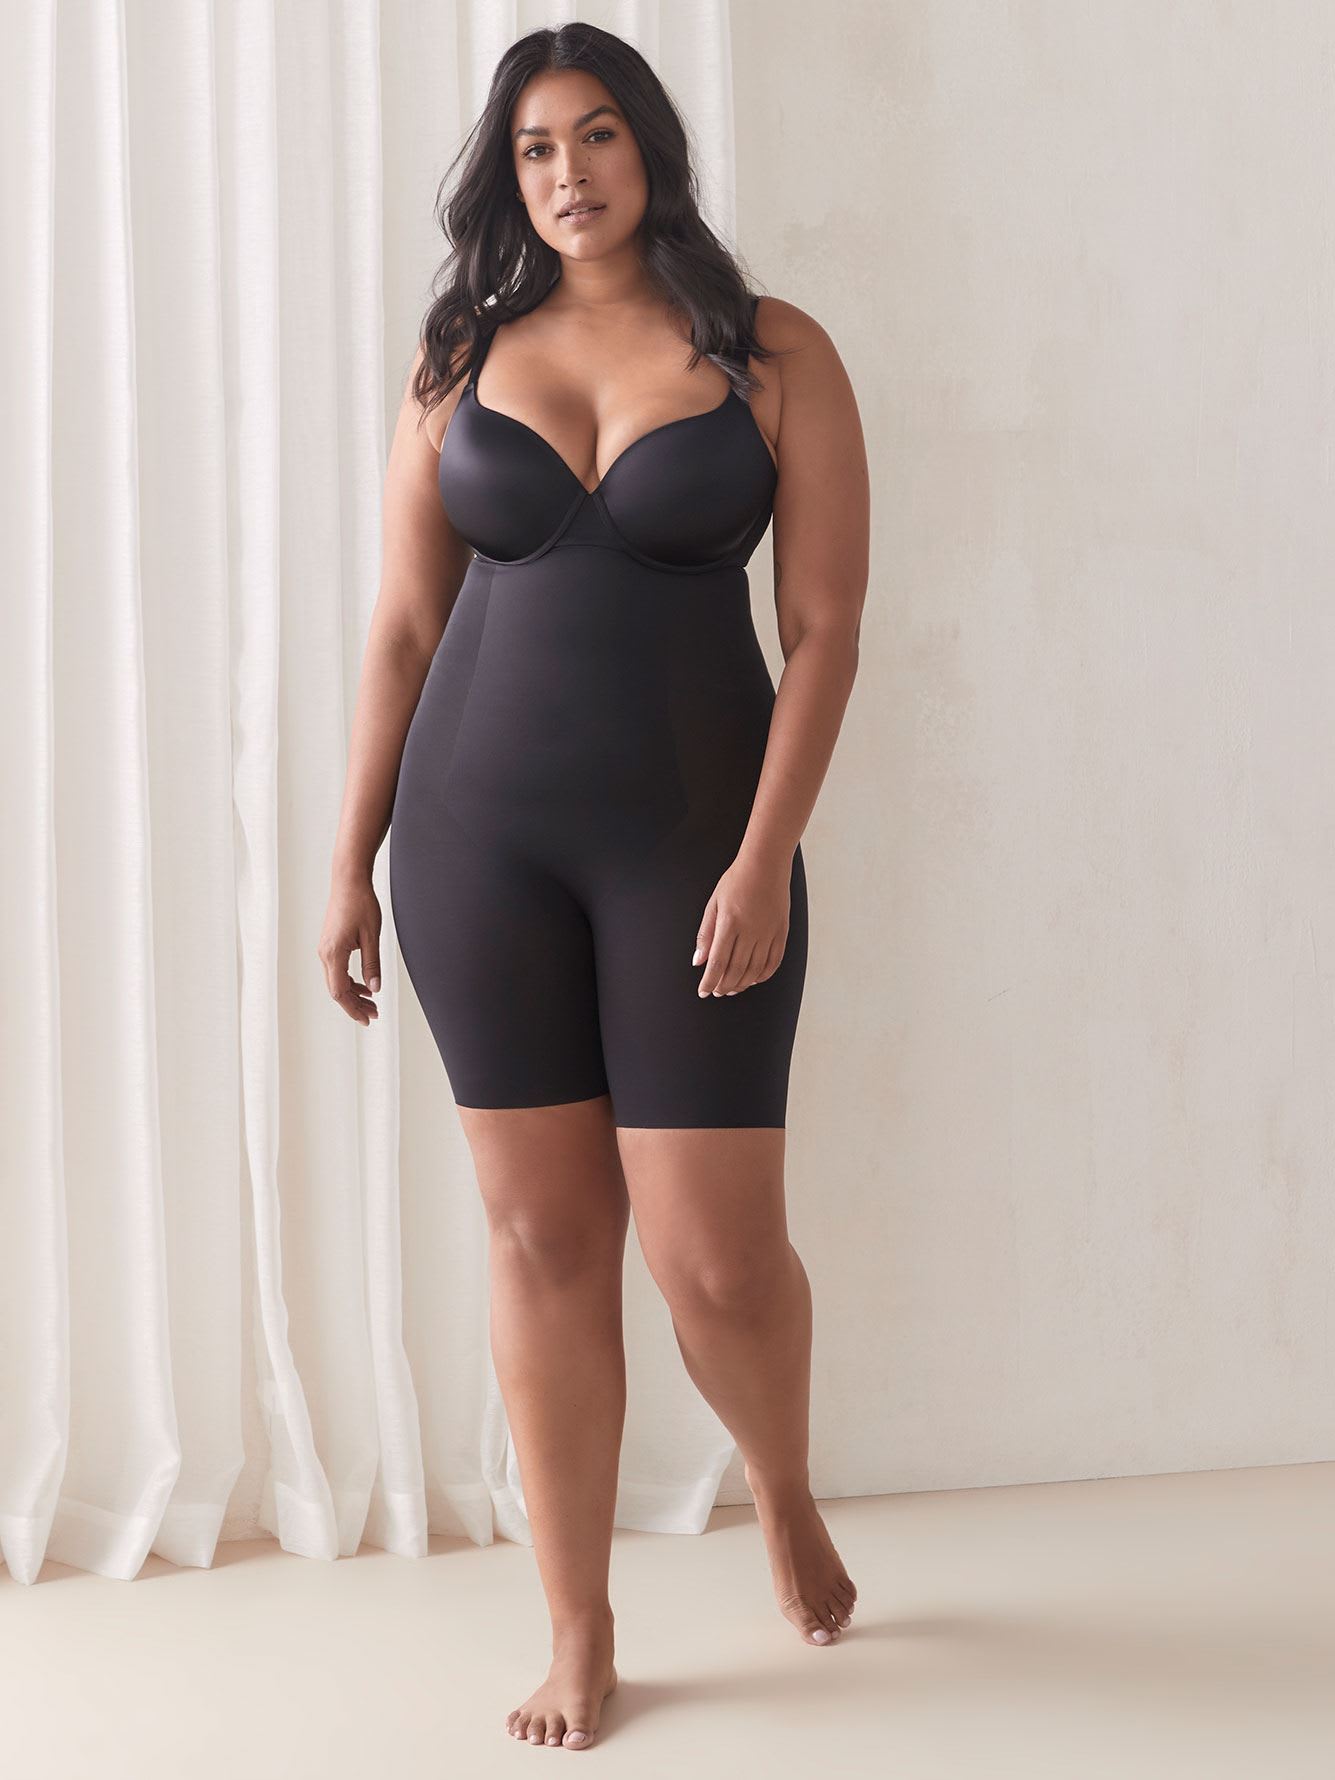 Plus Size Body Shapers - SPANX - Women's Plus Size Clothing - Kiyonna